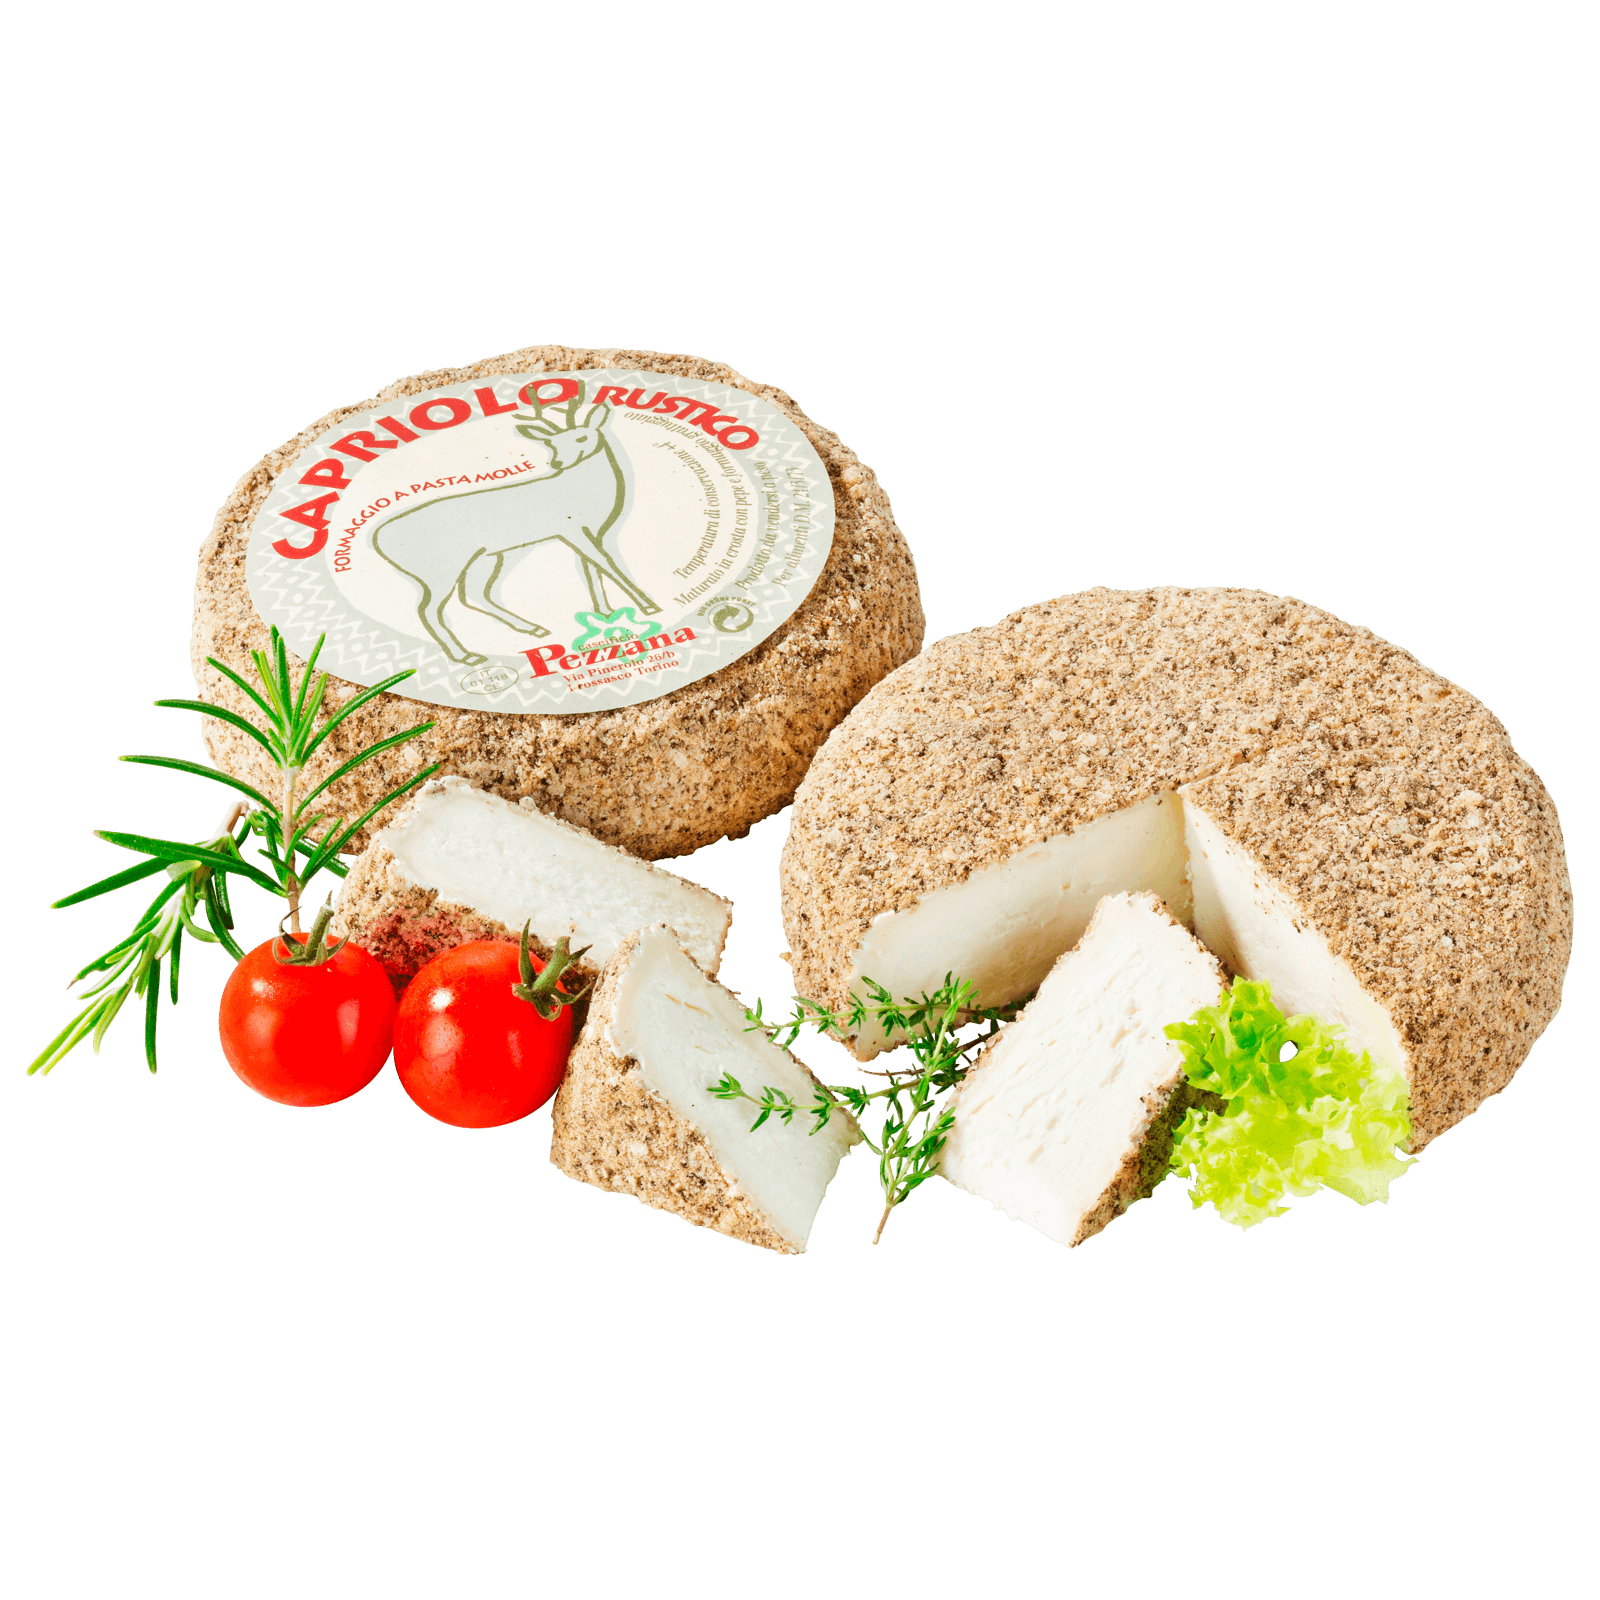 Pezzana Capriolo Rustiko Italienische Käsekomposition  für 2.79 EUR